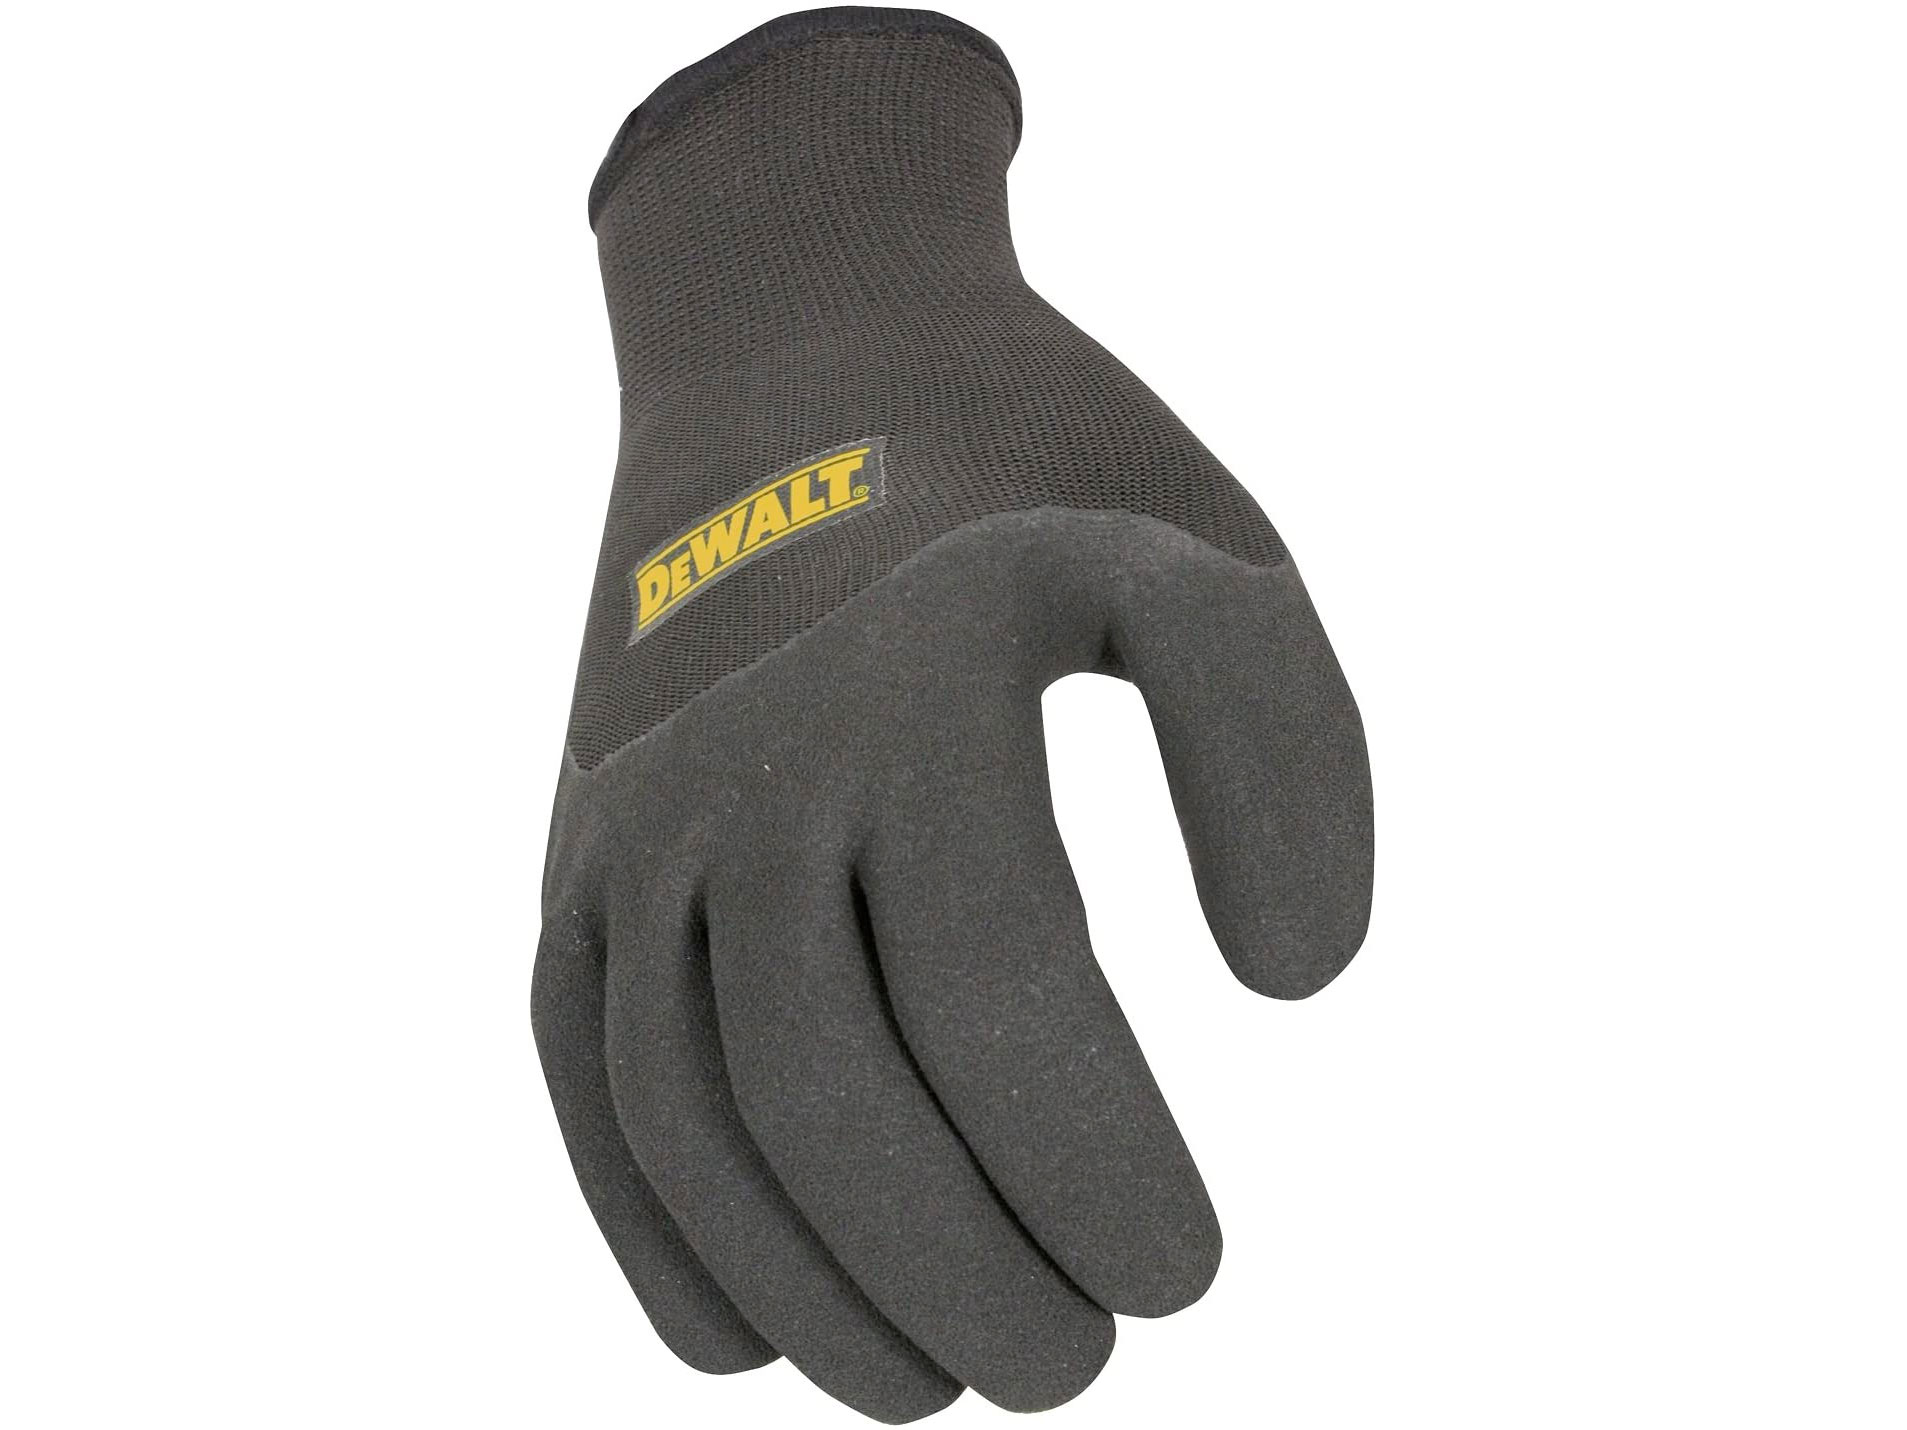 Amazon：DEWALT Thermal Insulated Grip Glove (Pack of 2)只賣$9.98